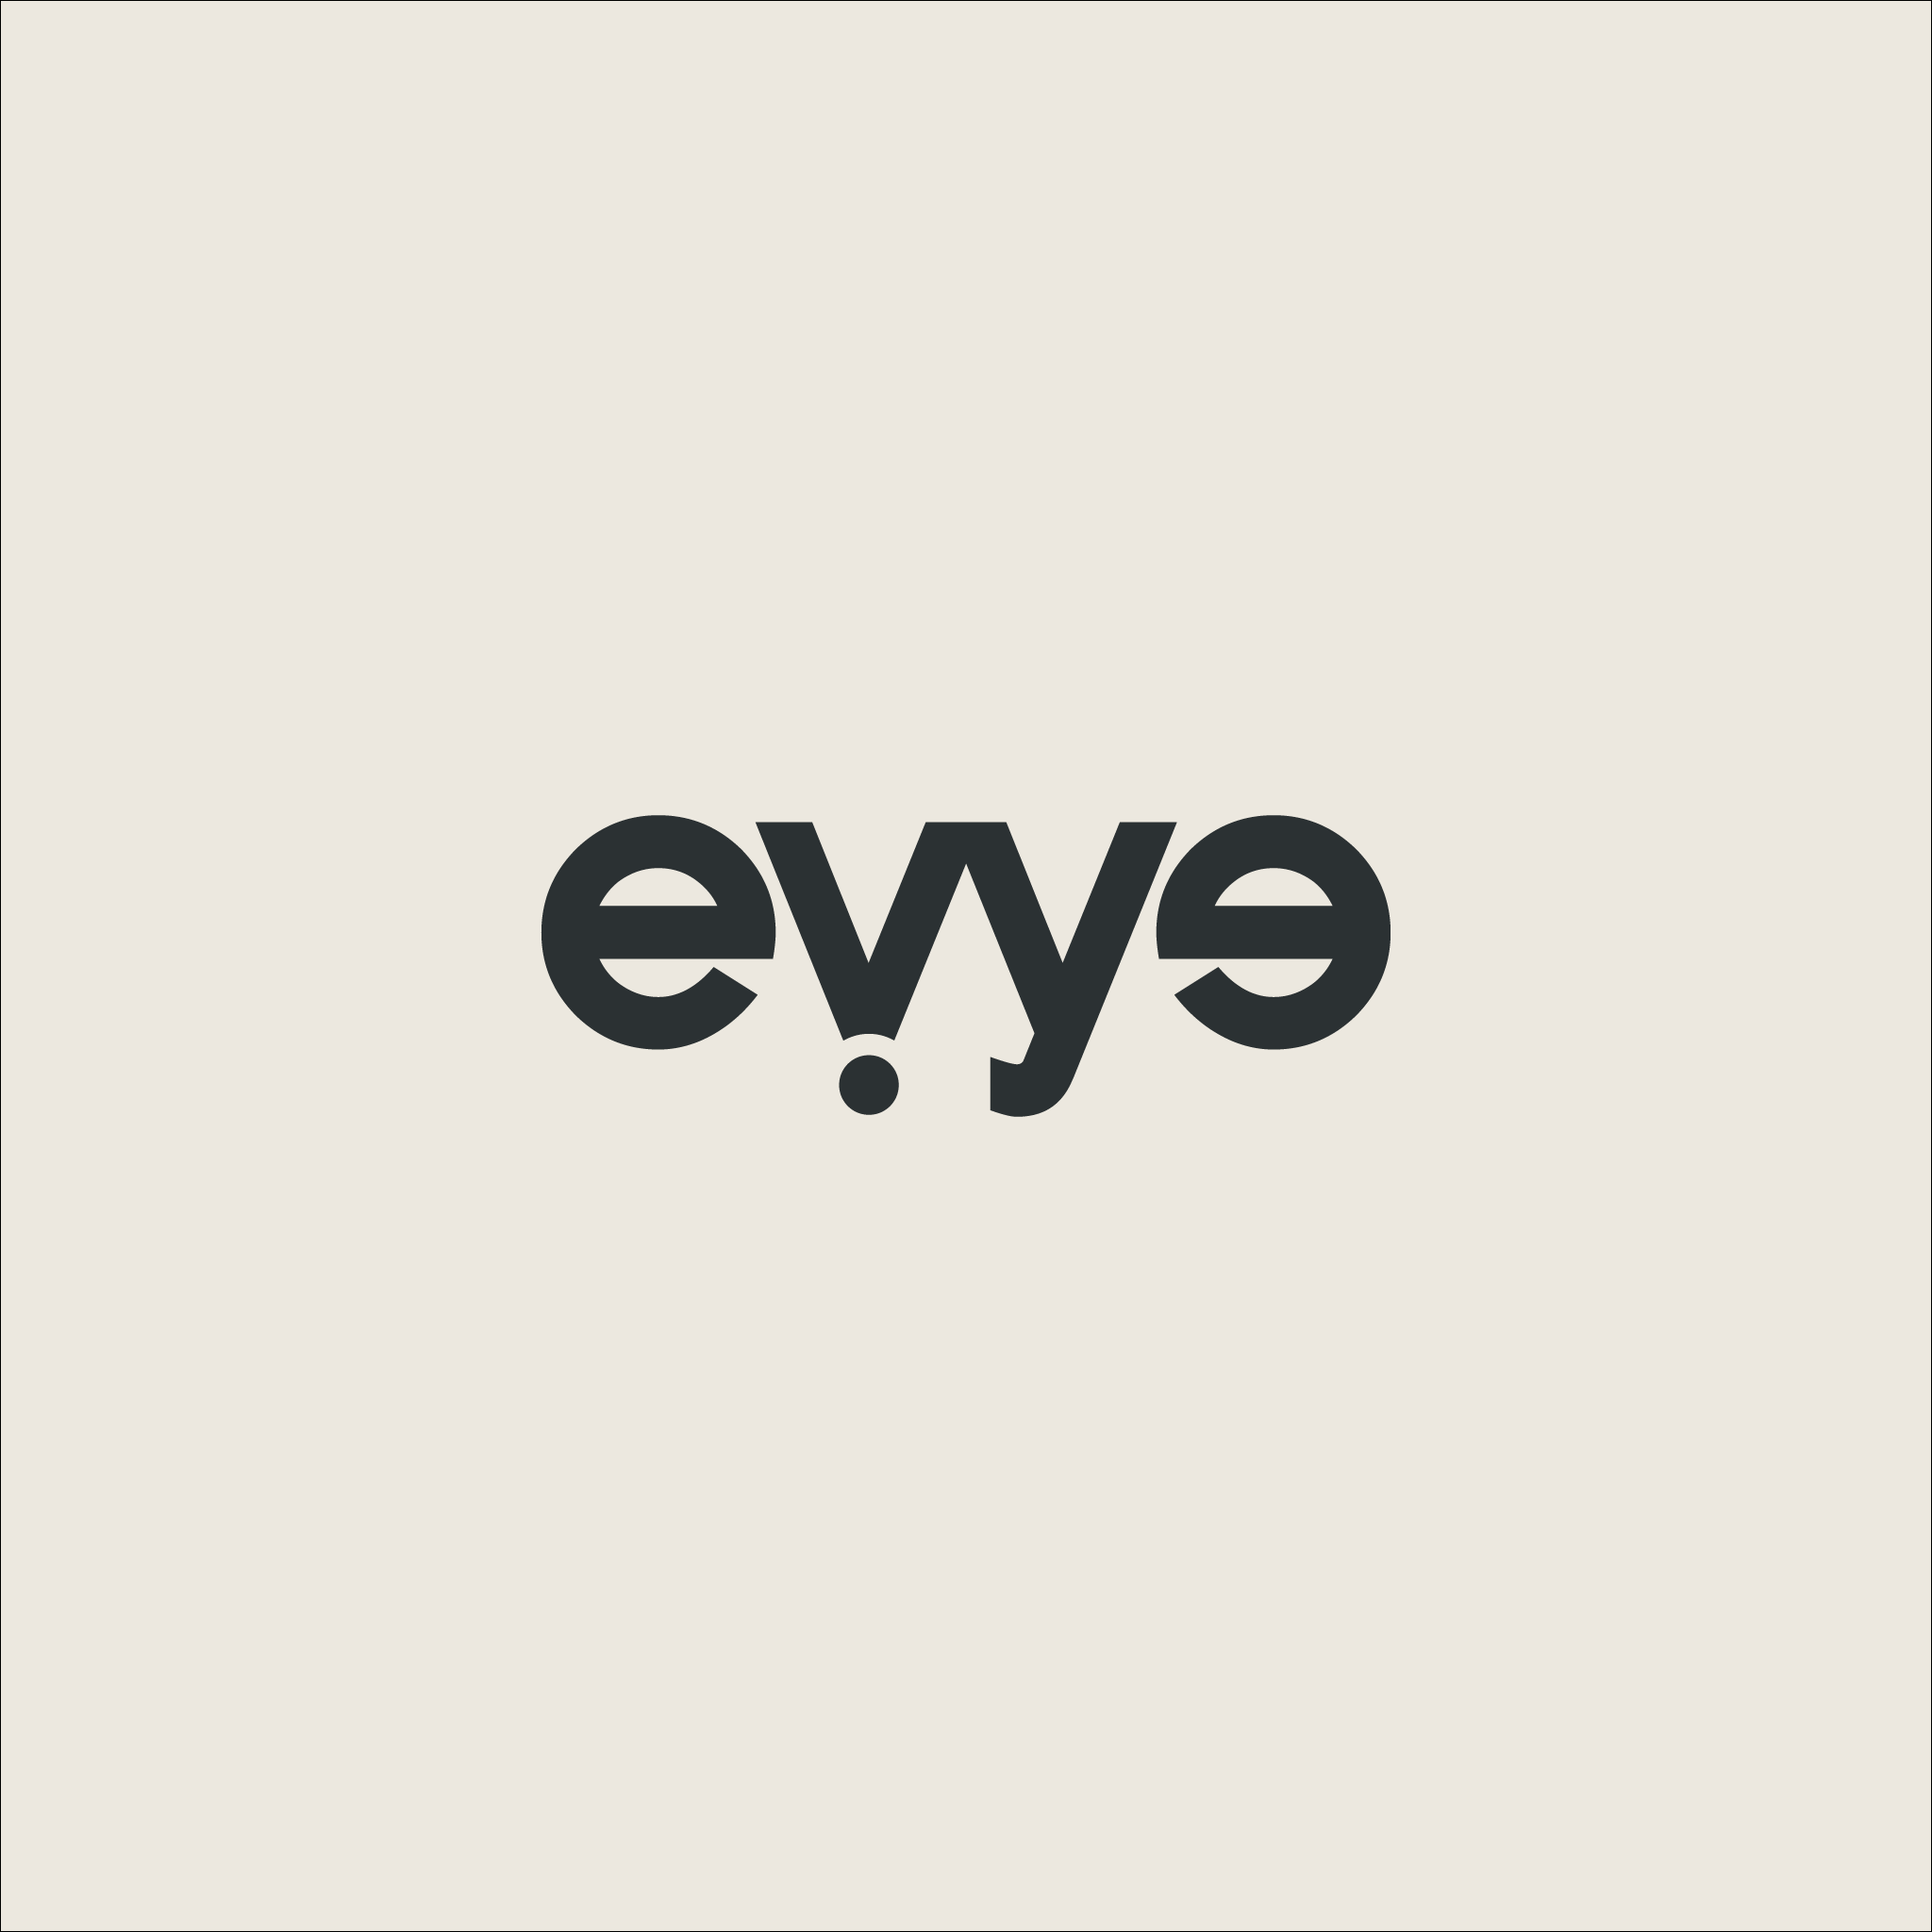 Evye Llp company logo